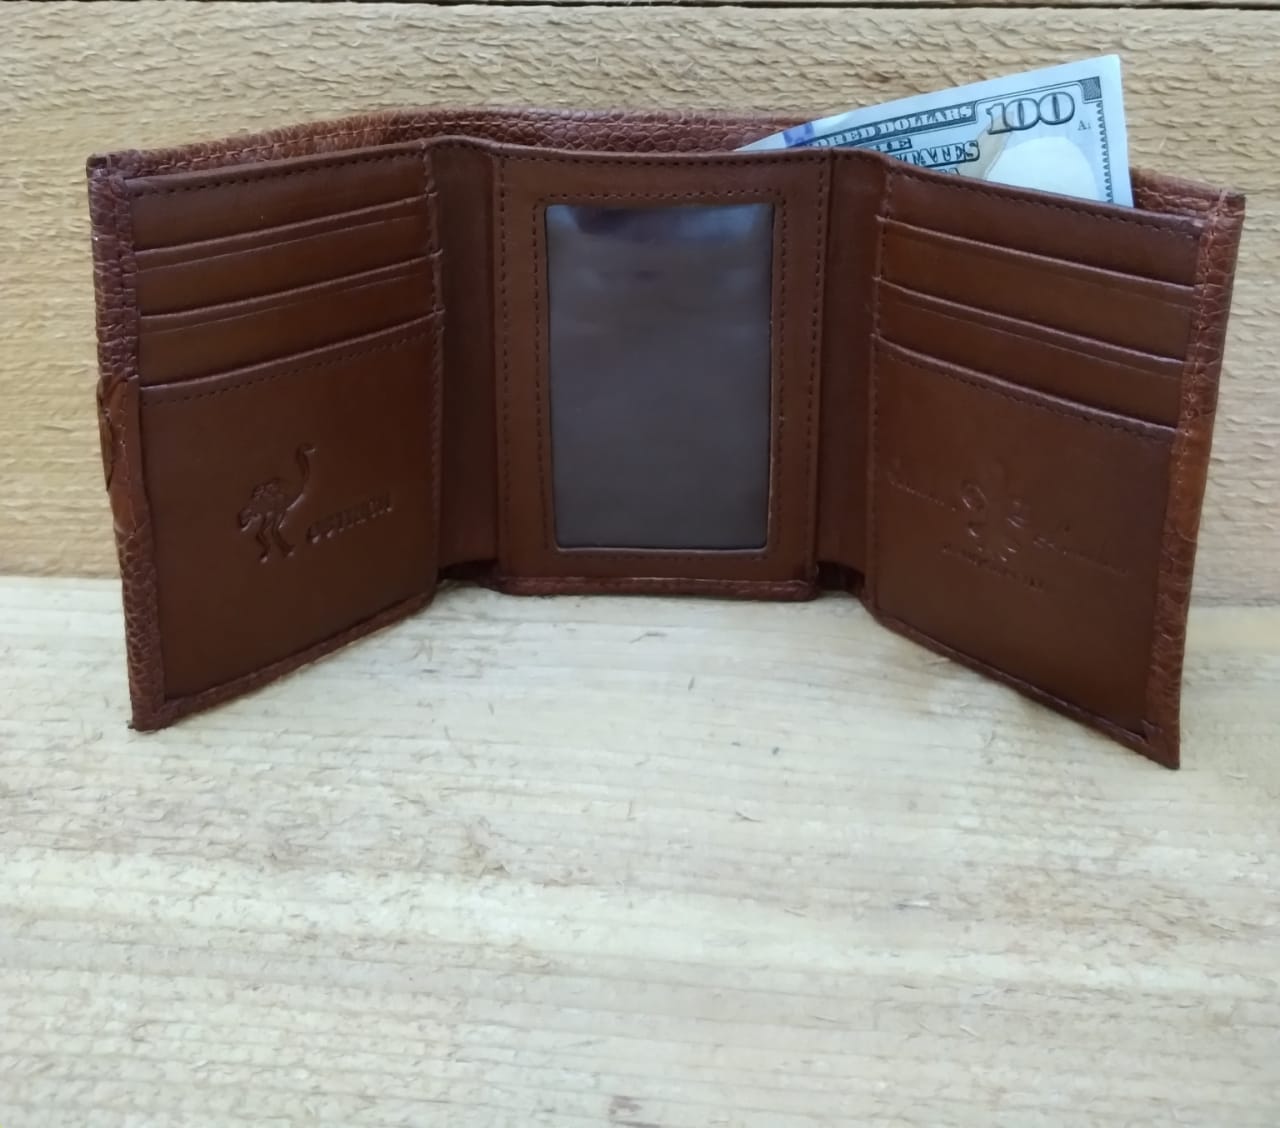 Pocket Secretary Cognac Ostrich Wallet